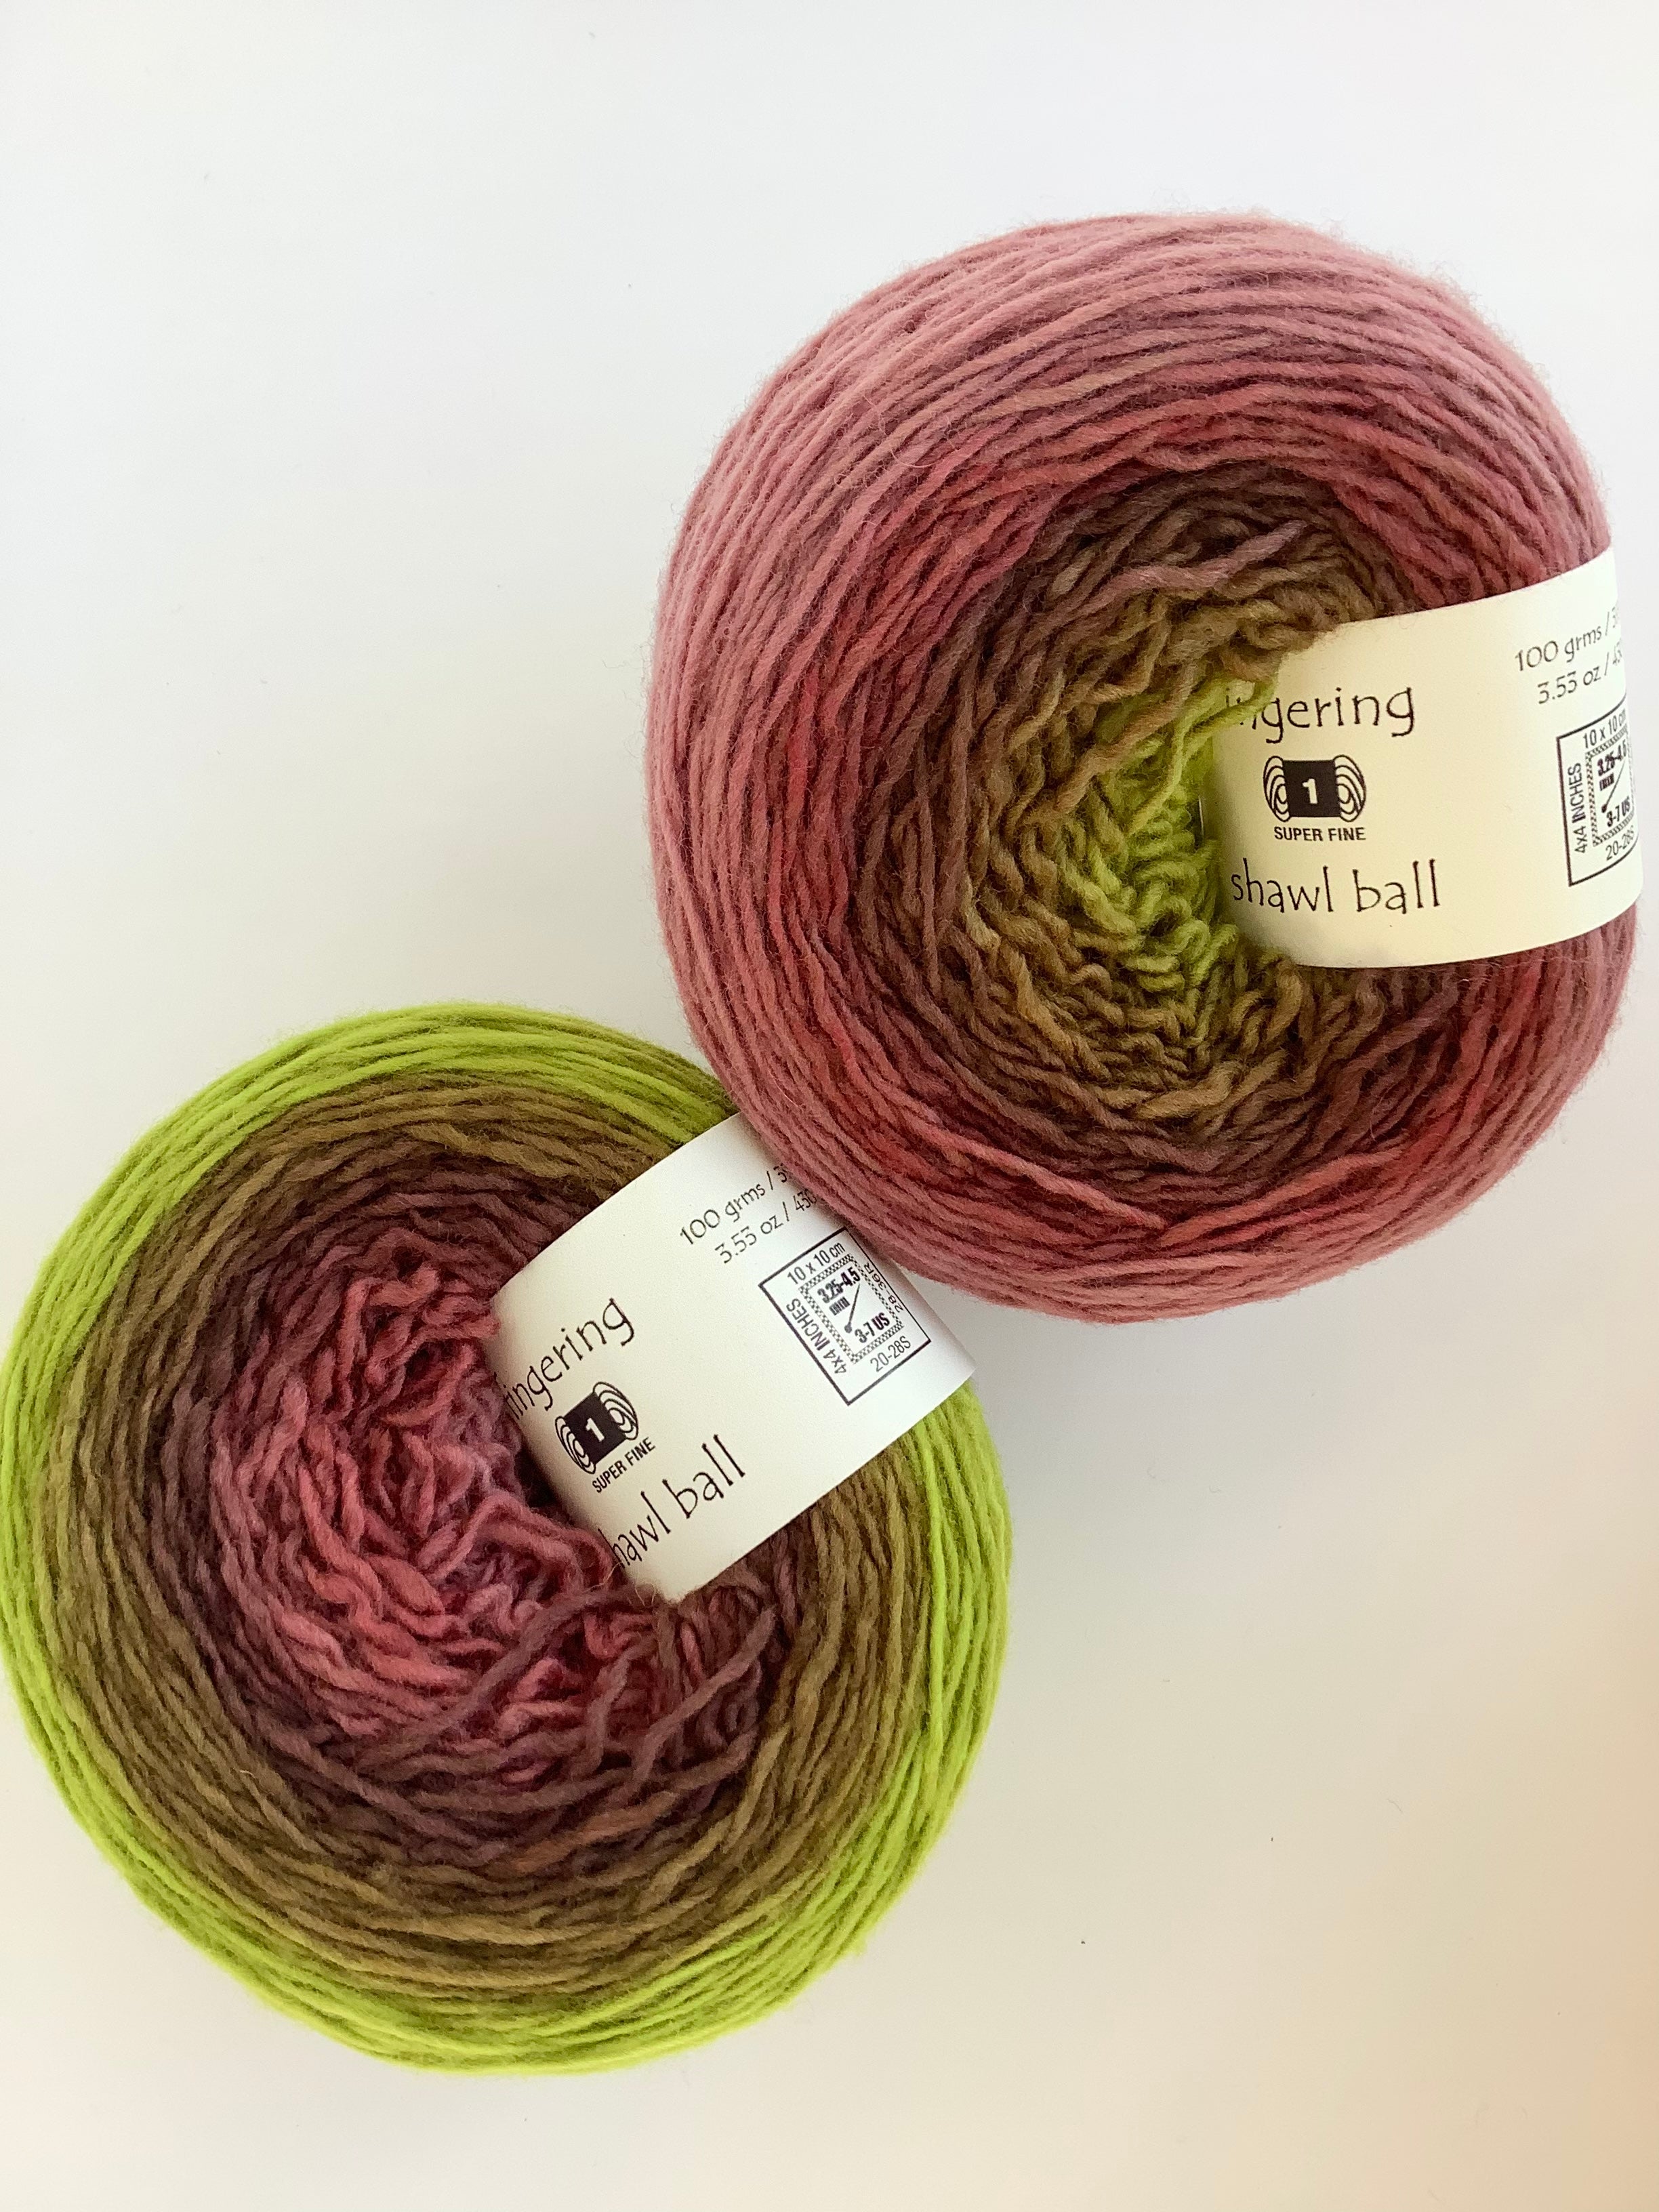 Autumn Rose - Ombré Merino Fingering Shawl Ball yarn from Freia 